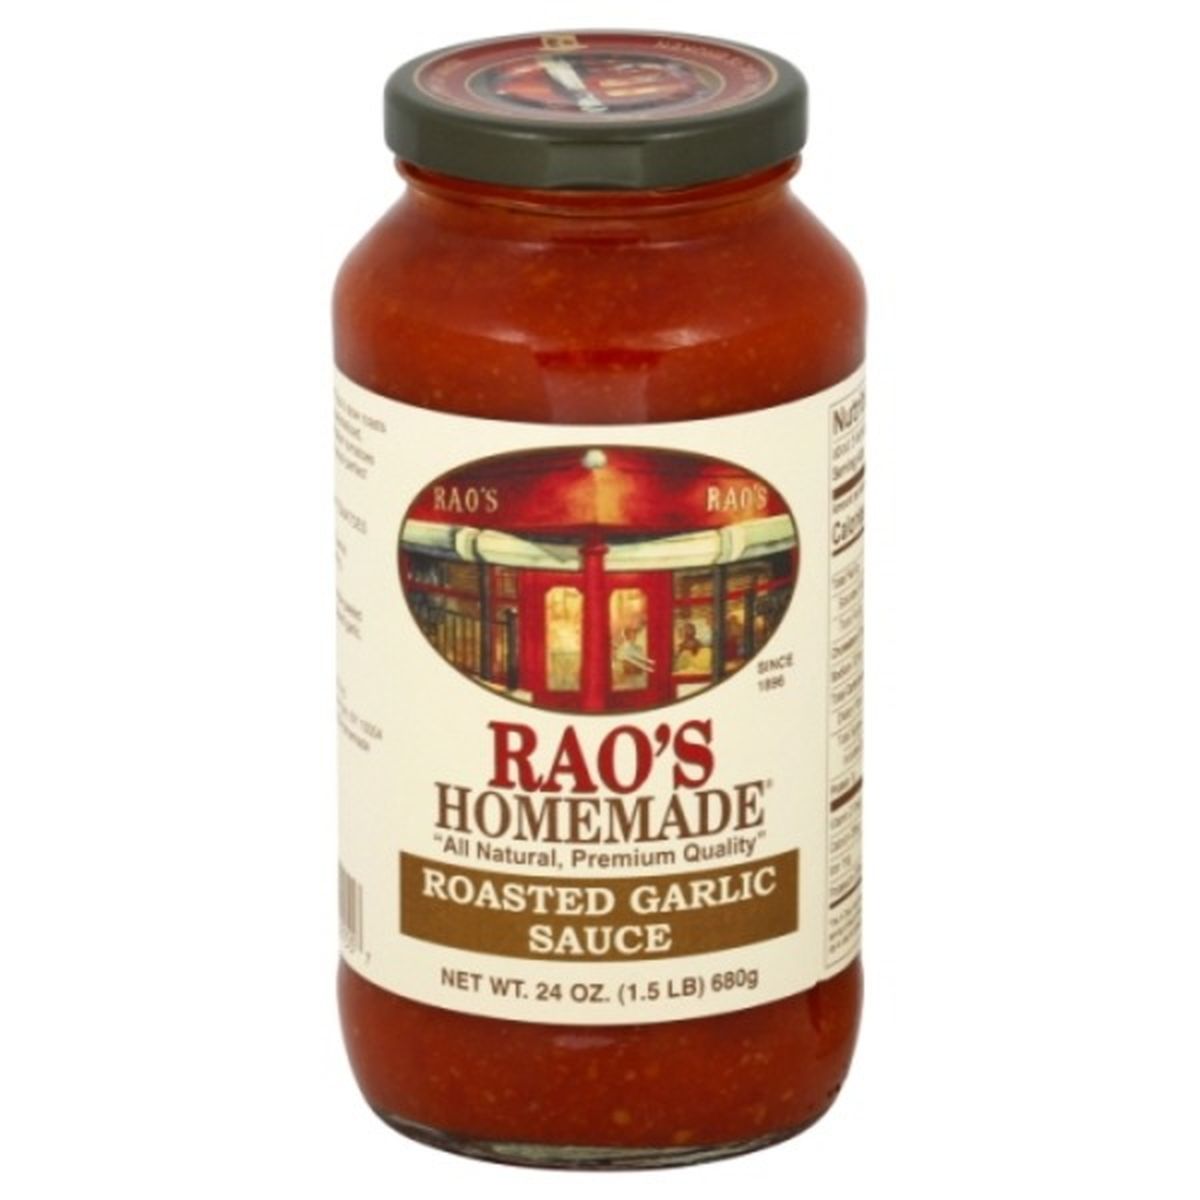 Calories in Rao's Homemade Homemade Roasted Garlic Sauce